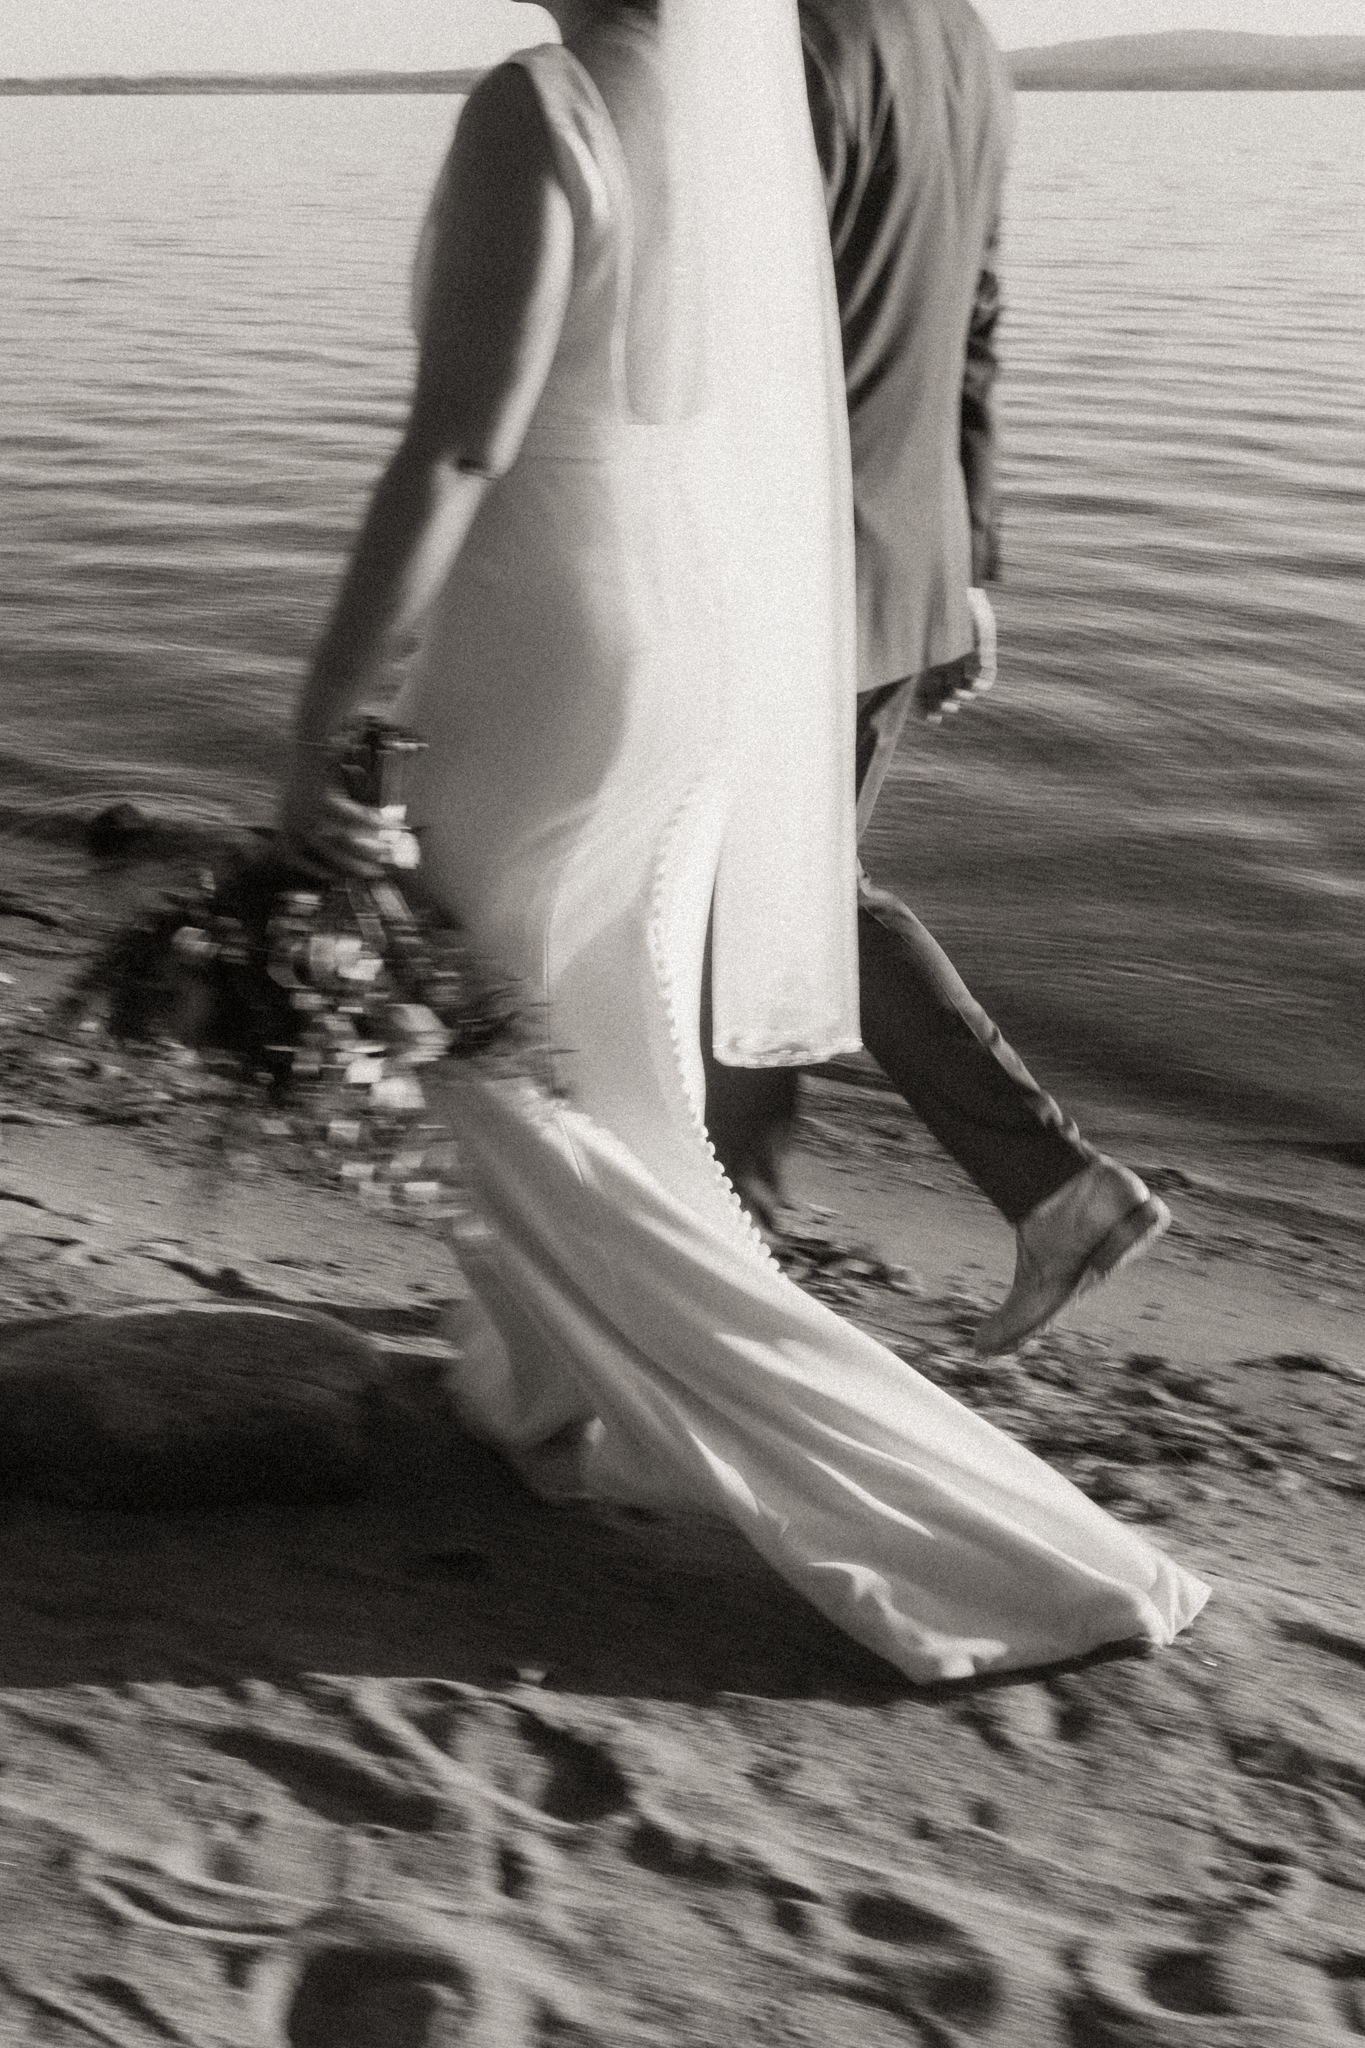 Motion blur of bride and groom walking